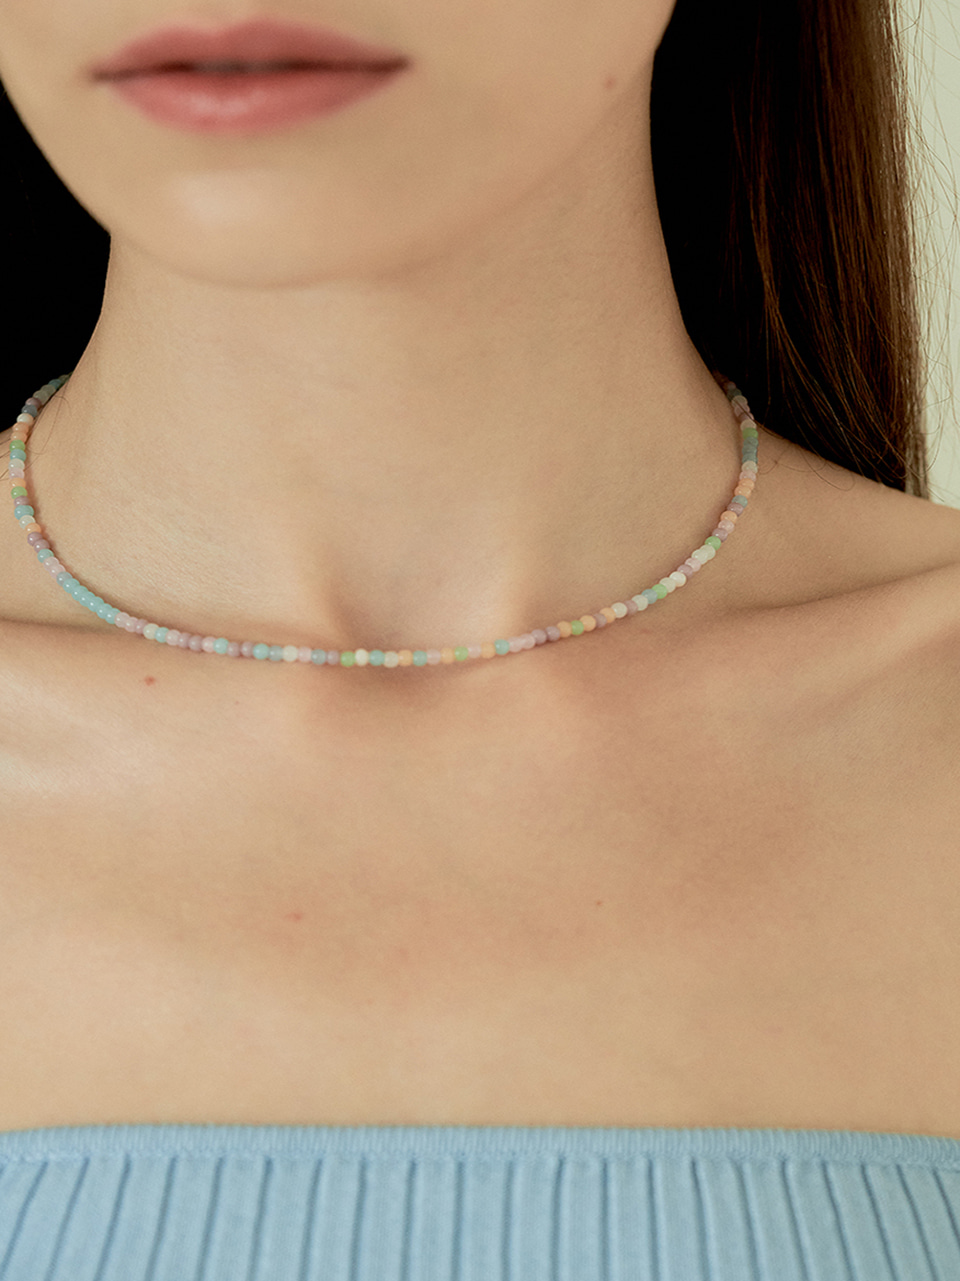 Cool-Tone Beads NecklaceCOTOIT